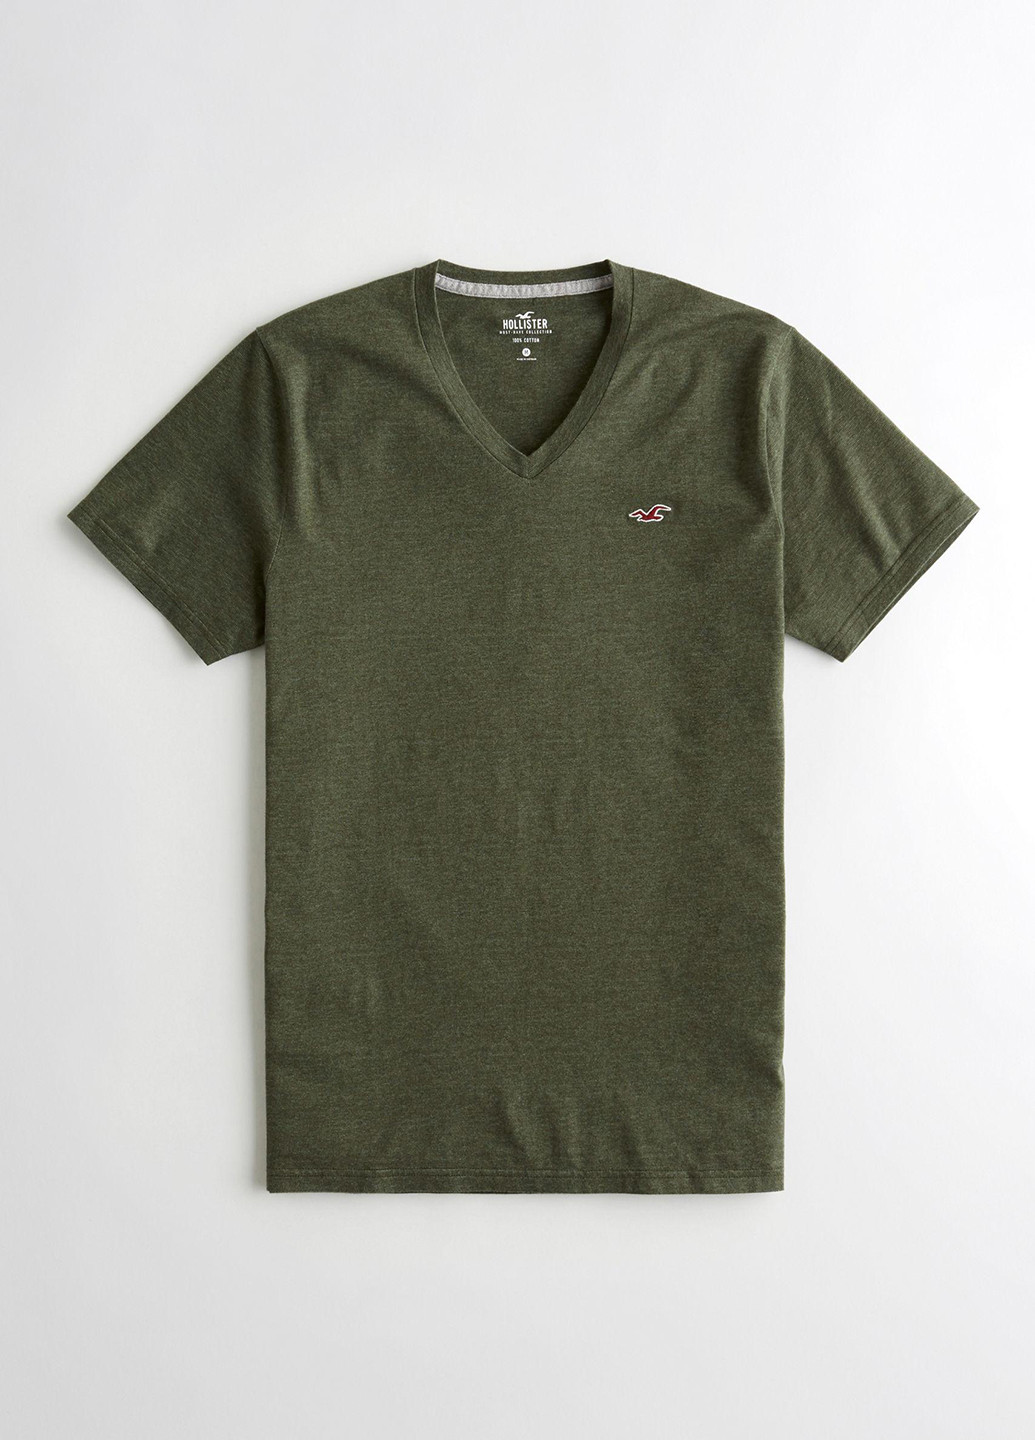 Хаки (оливковая) футболка Hollister